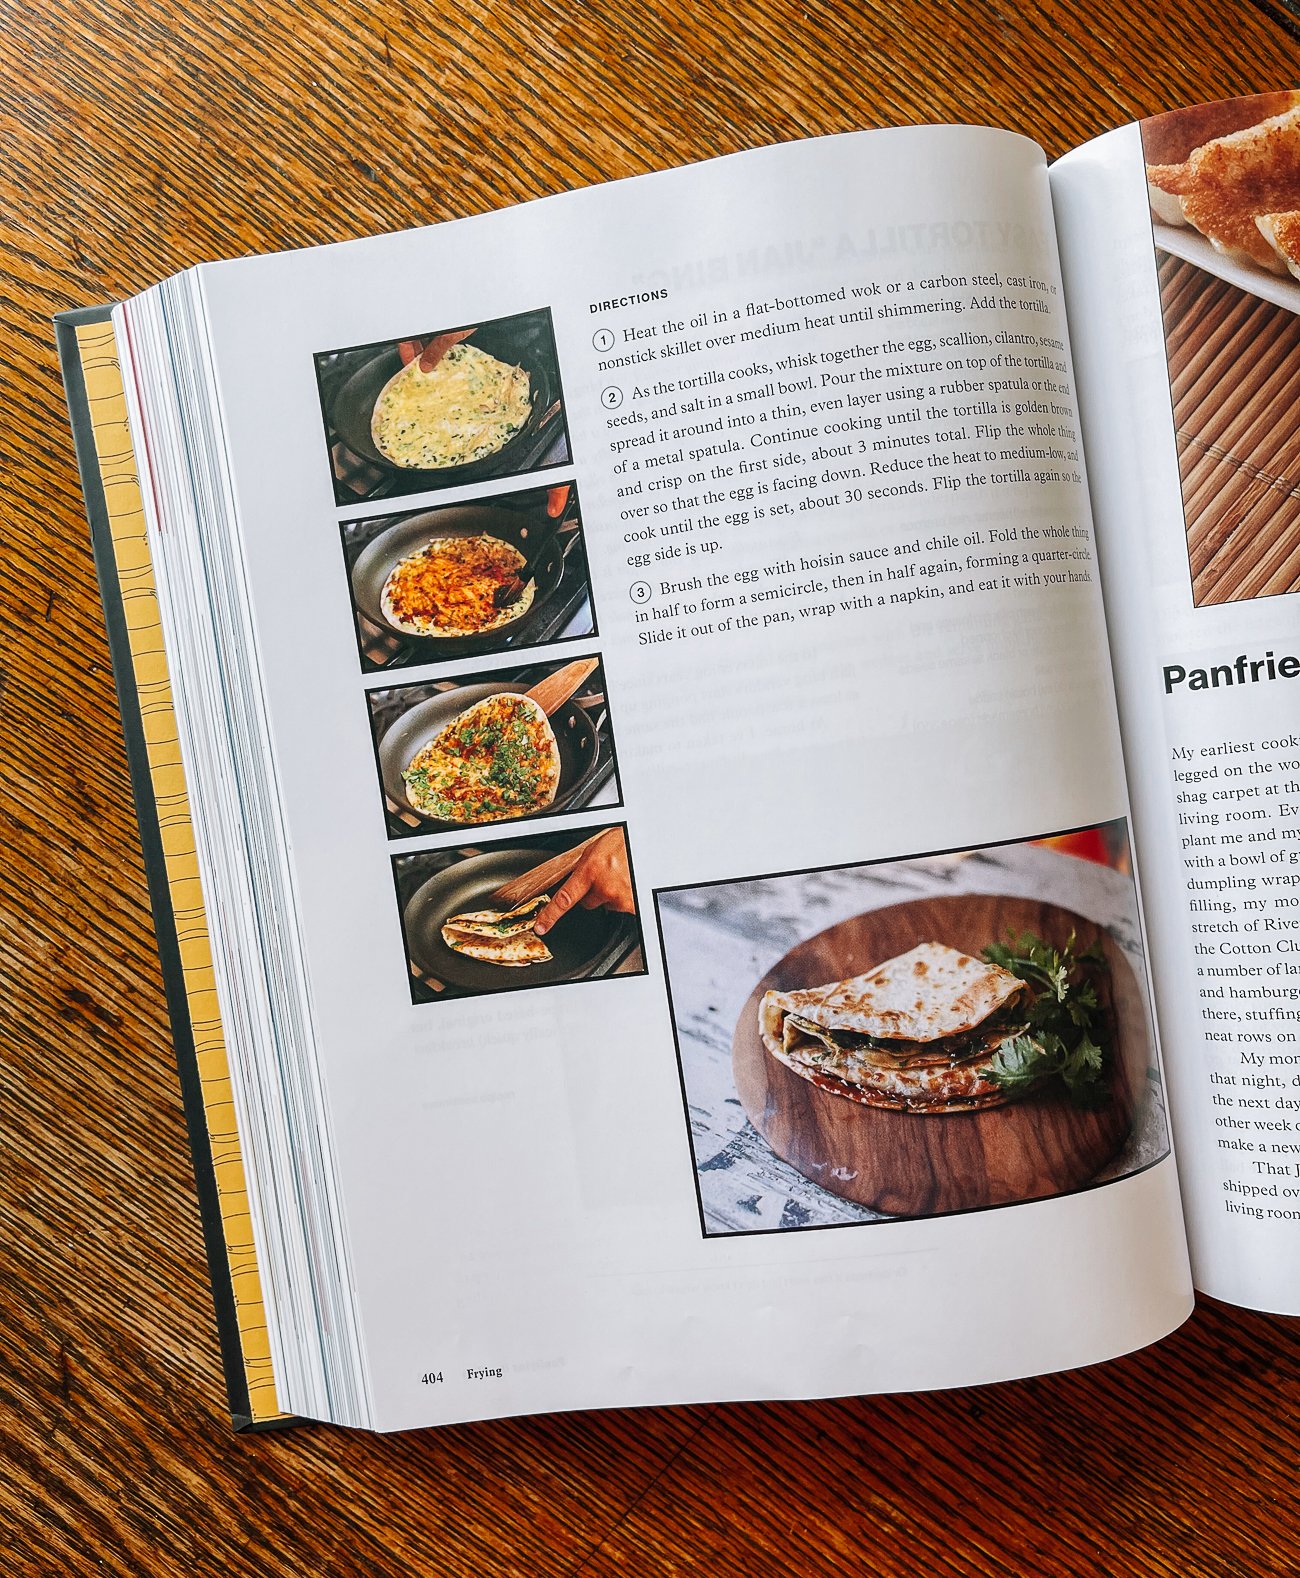 tortilla jian bing recipe in The Wok cookbook